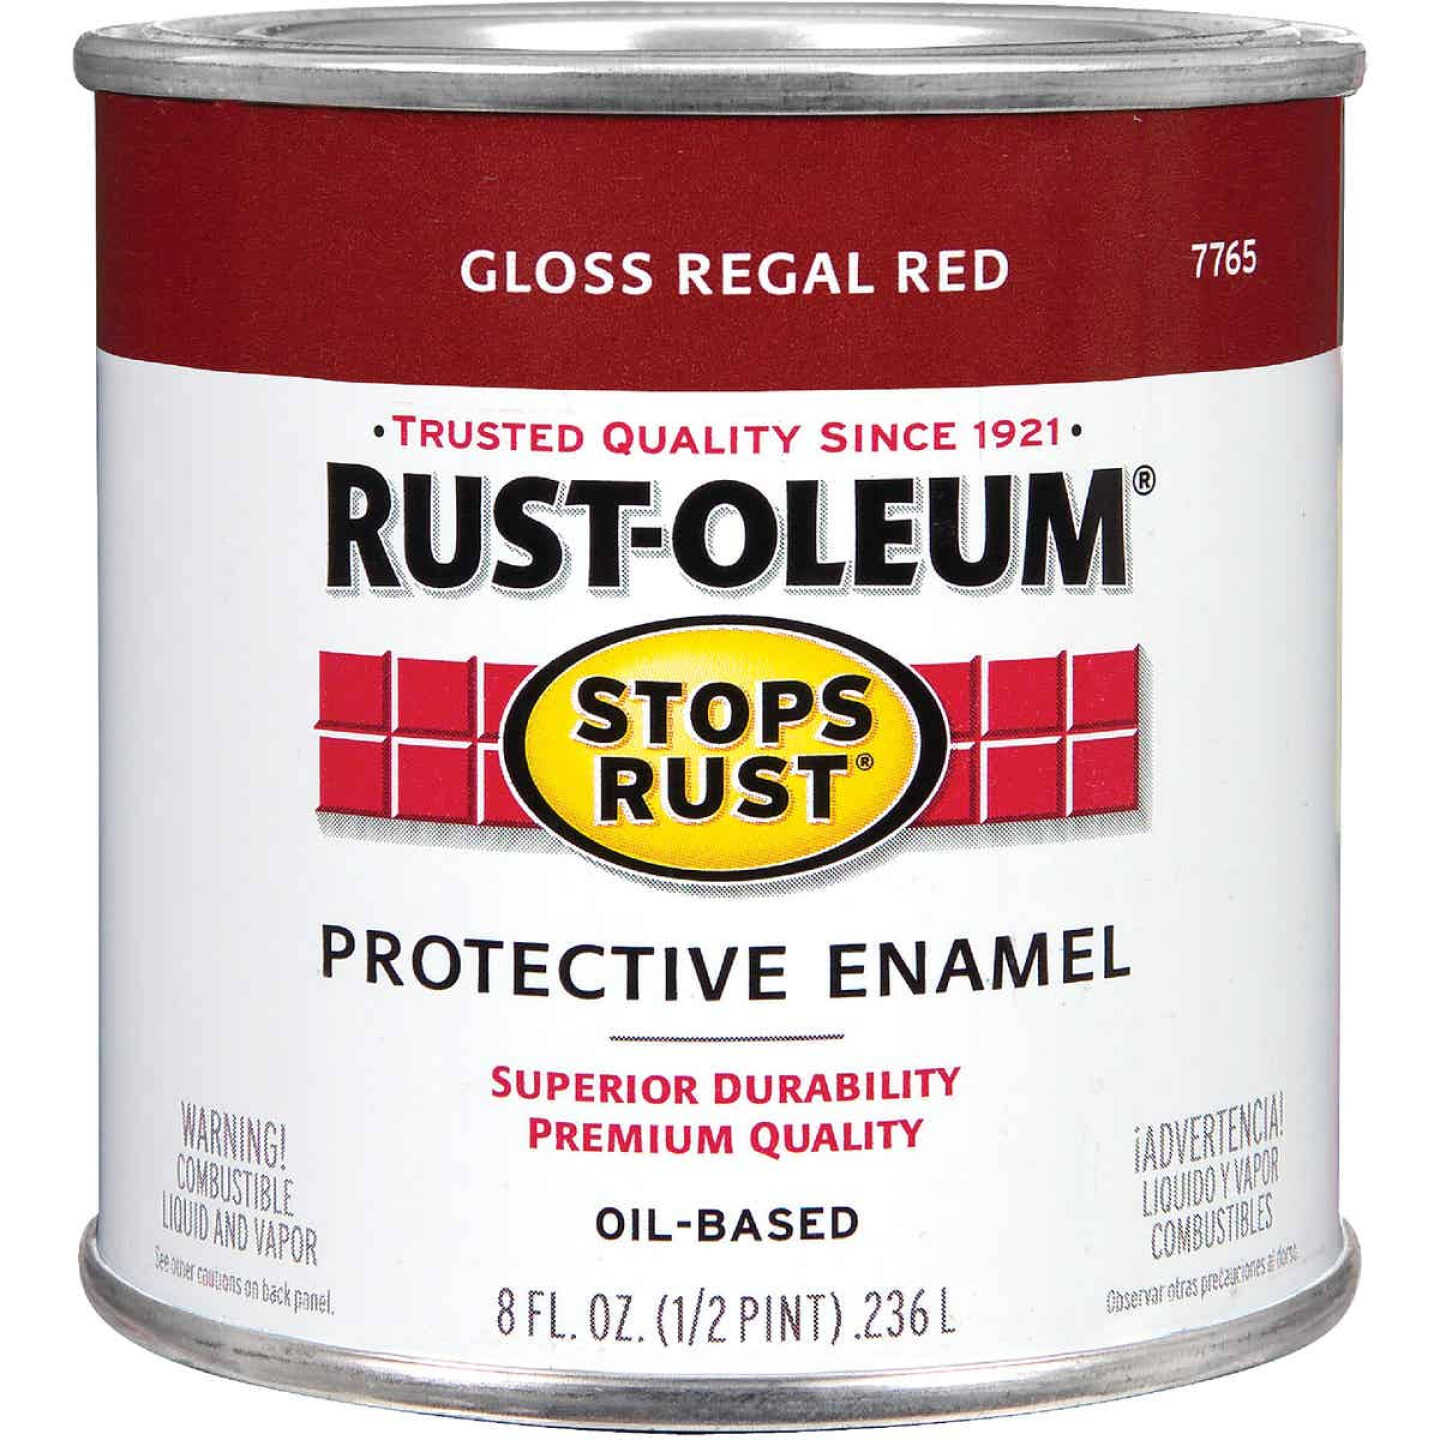 Rust Oleum Gloss Regal Red Stops Rust Protective Enamel Spray Paint - 12 oz